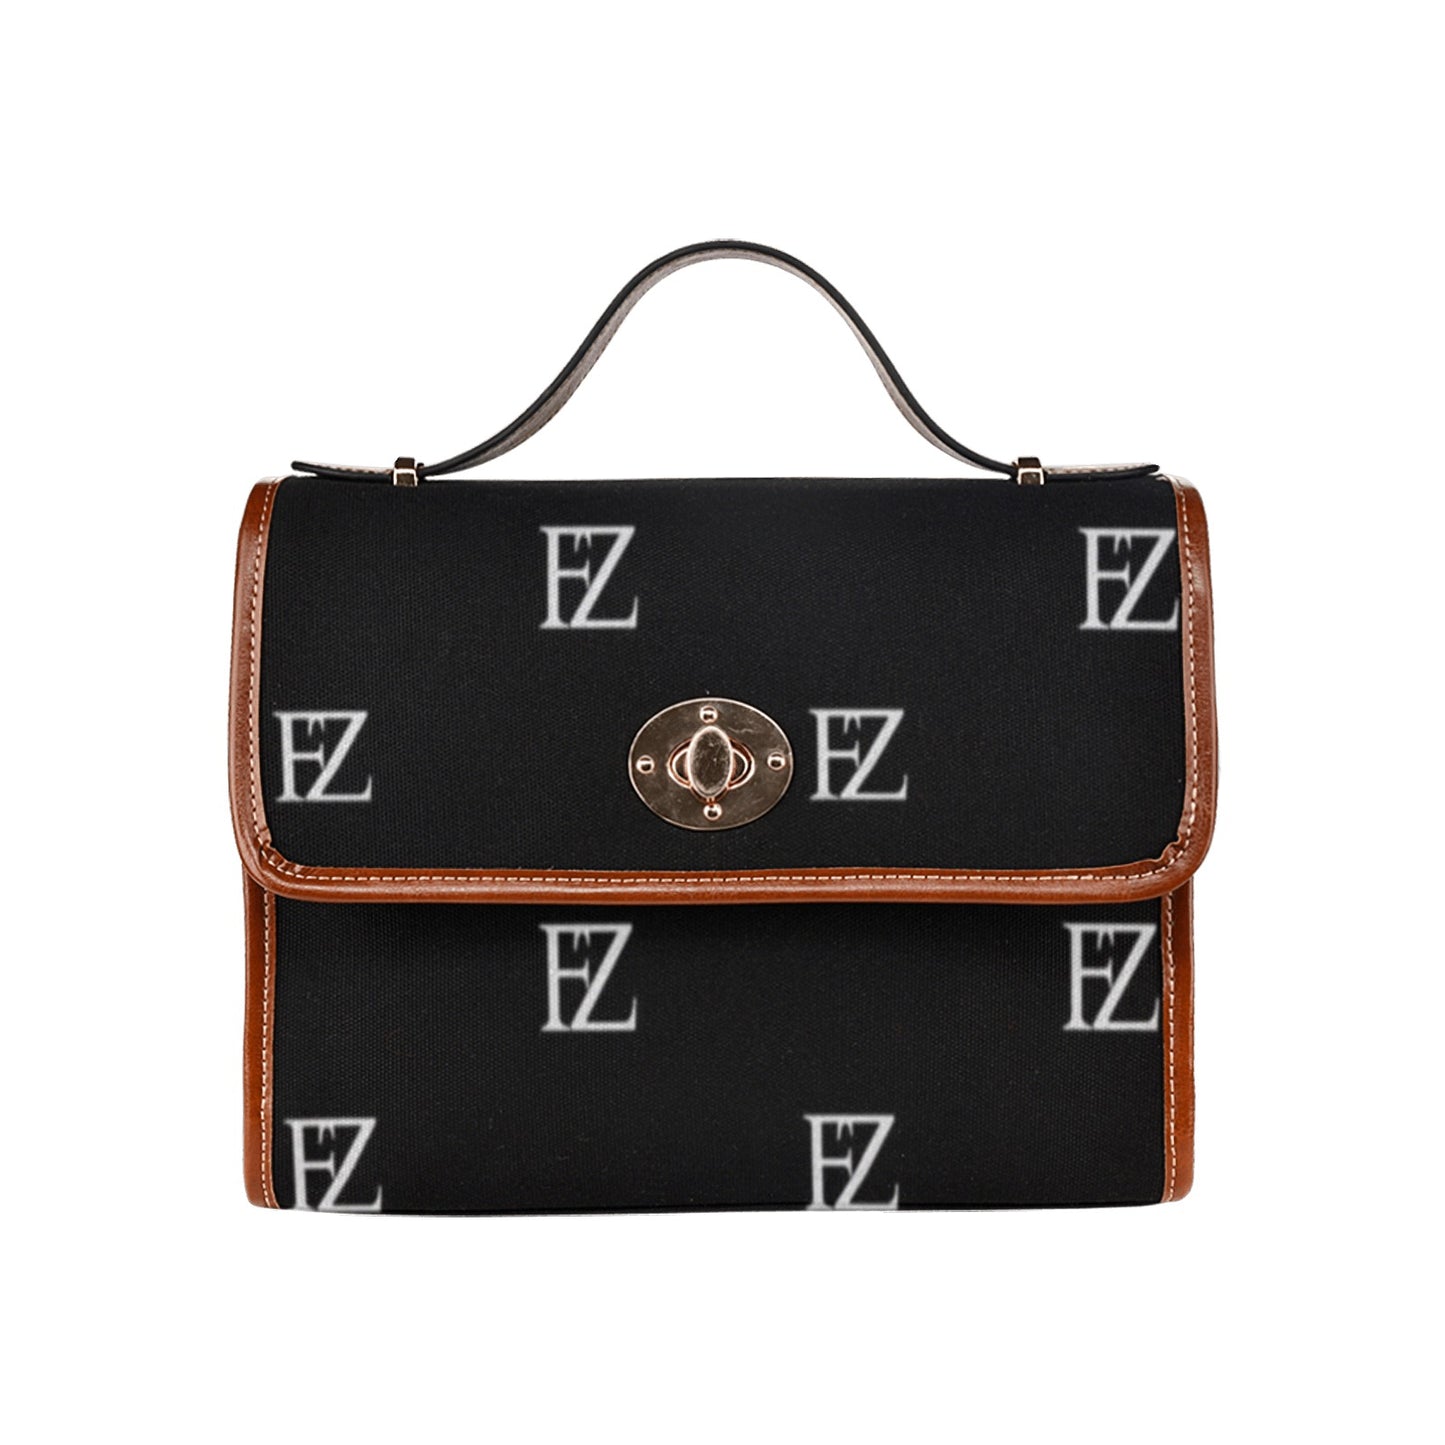 fz zone handbag one size / fz zone handbag - black all over print waterproof canvas bag(model1641)(brown strap)